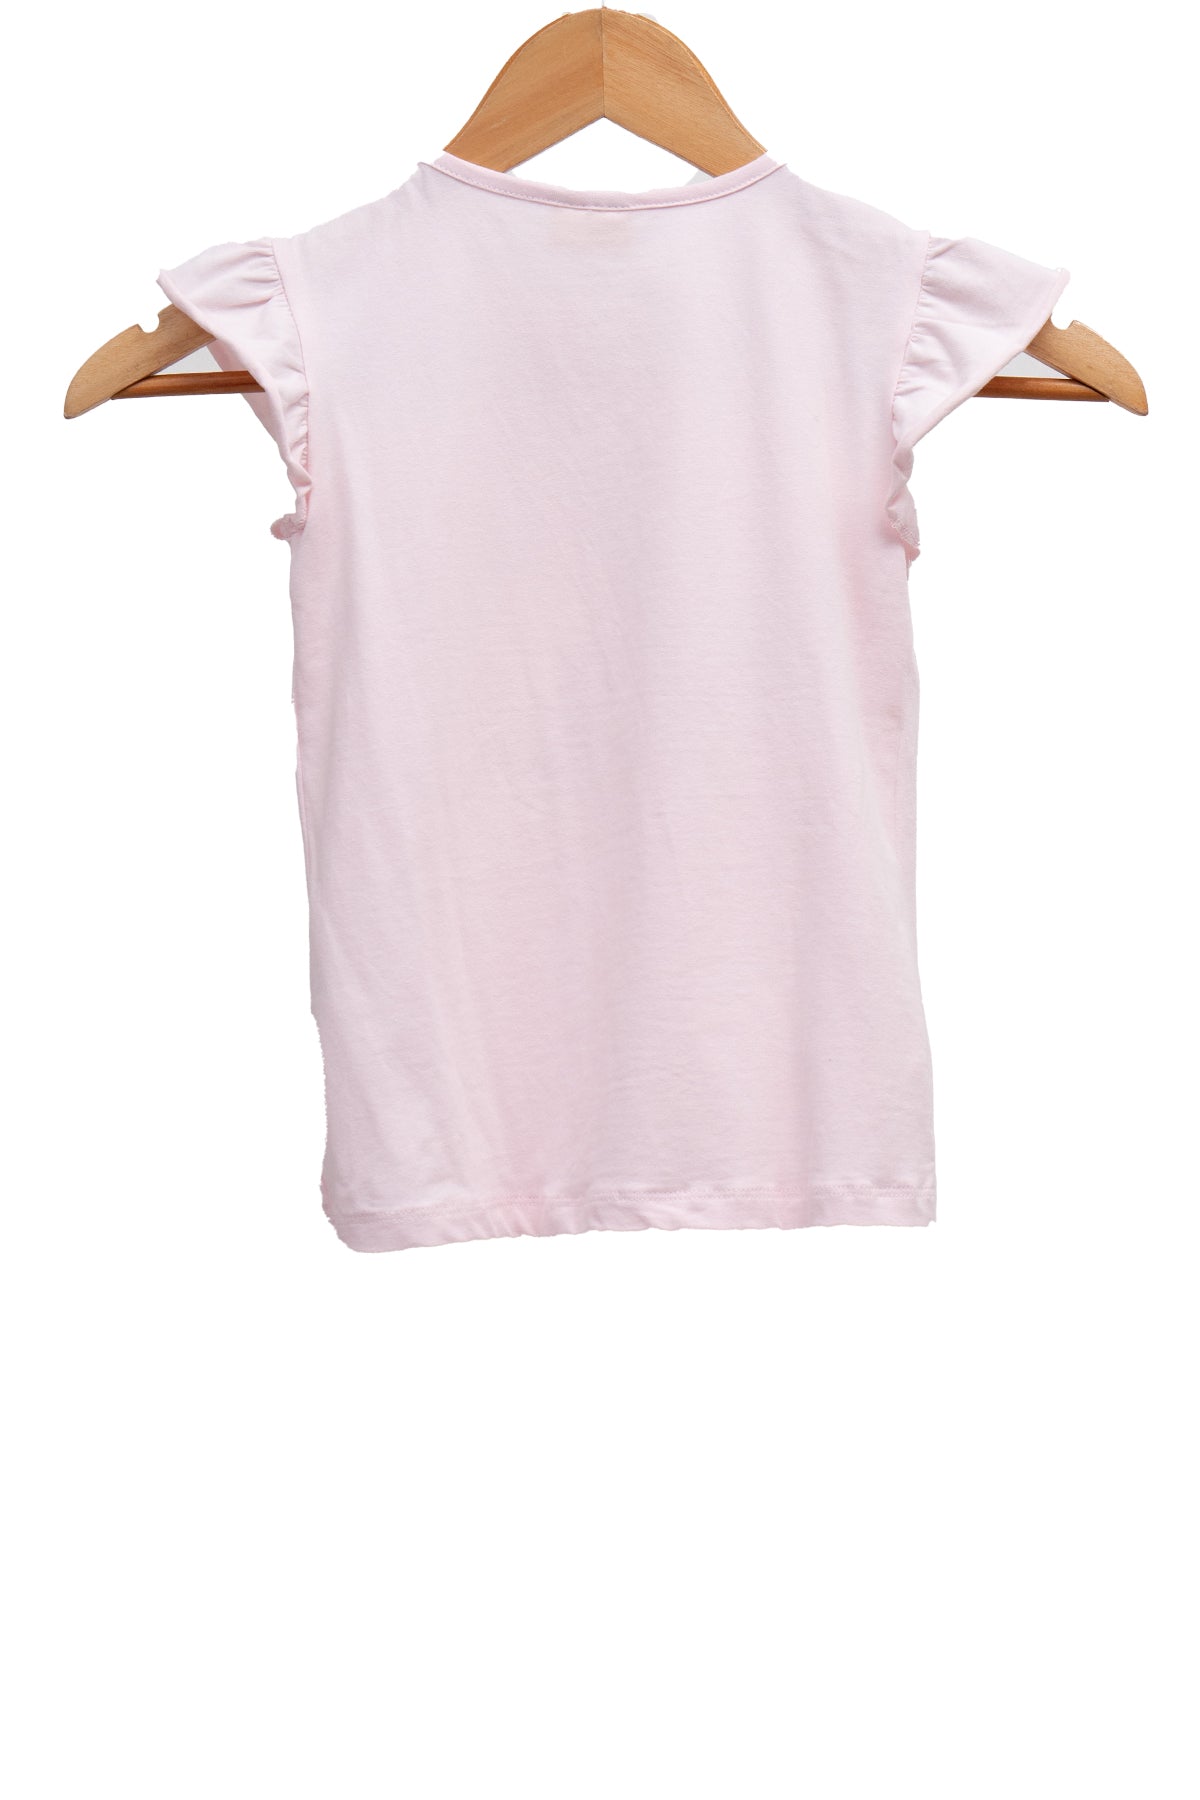 Tween Kids Girls Casual T-Shirt